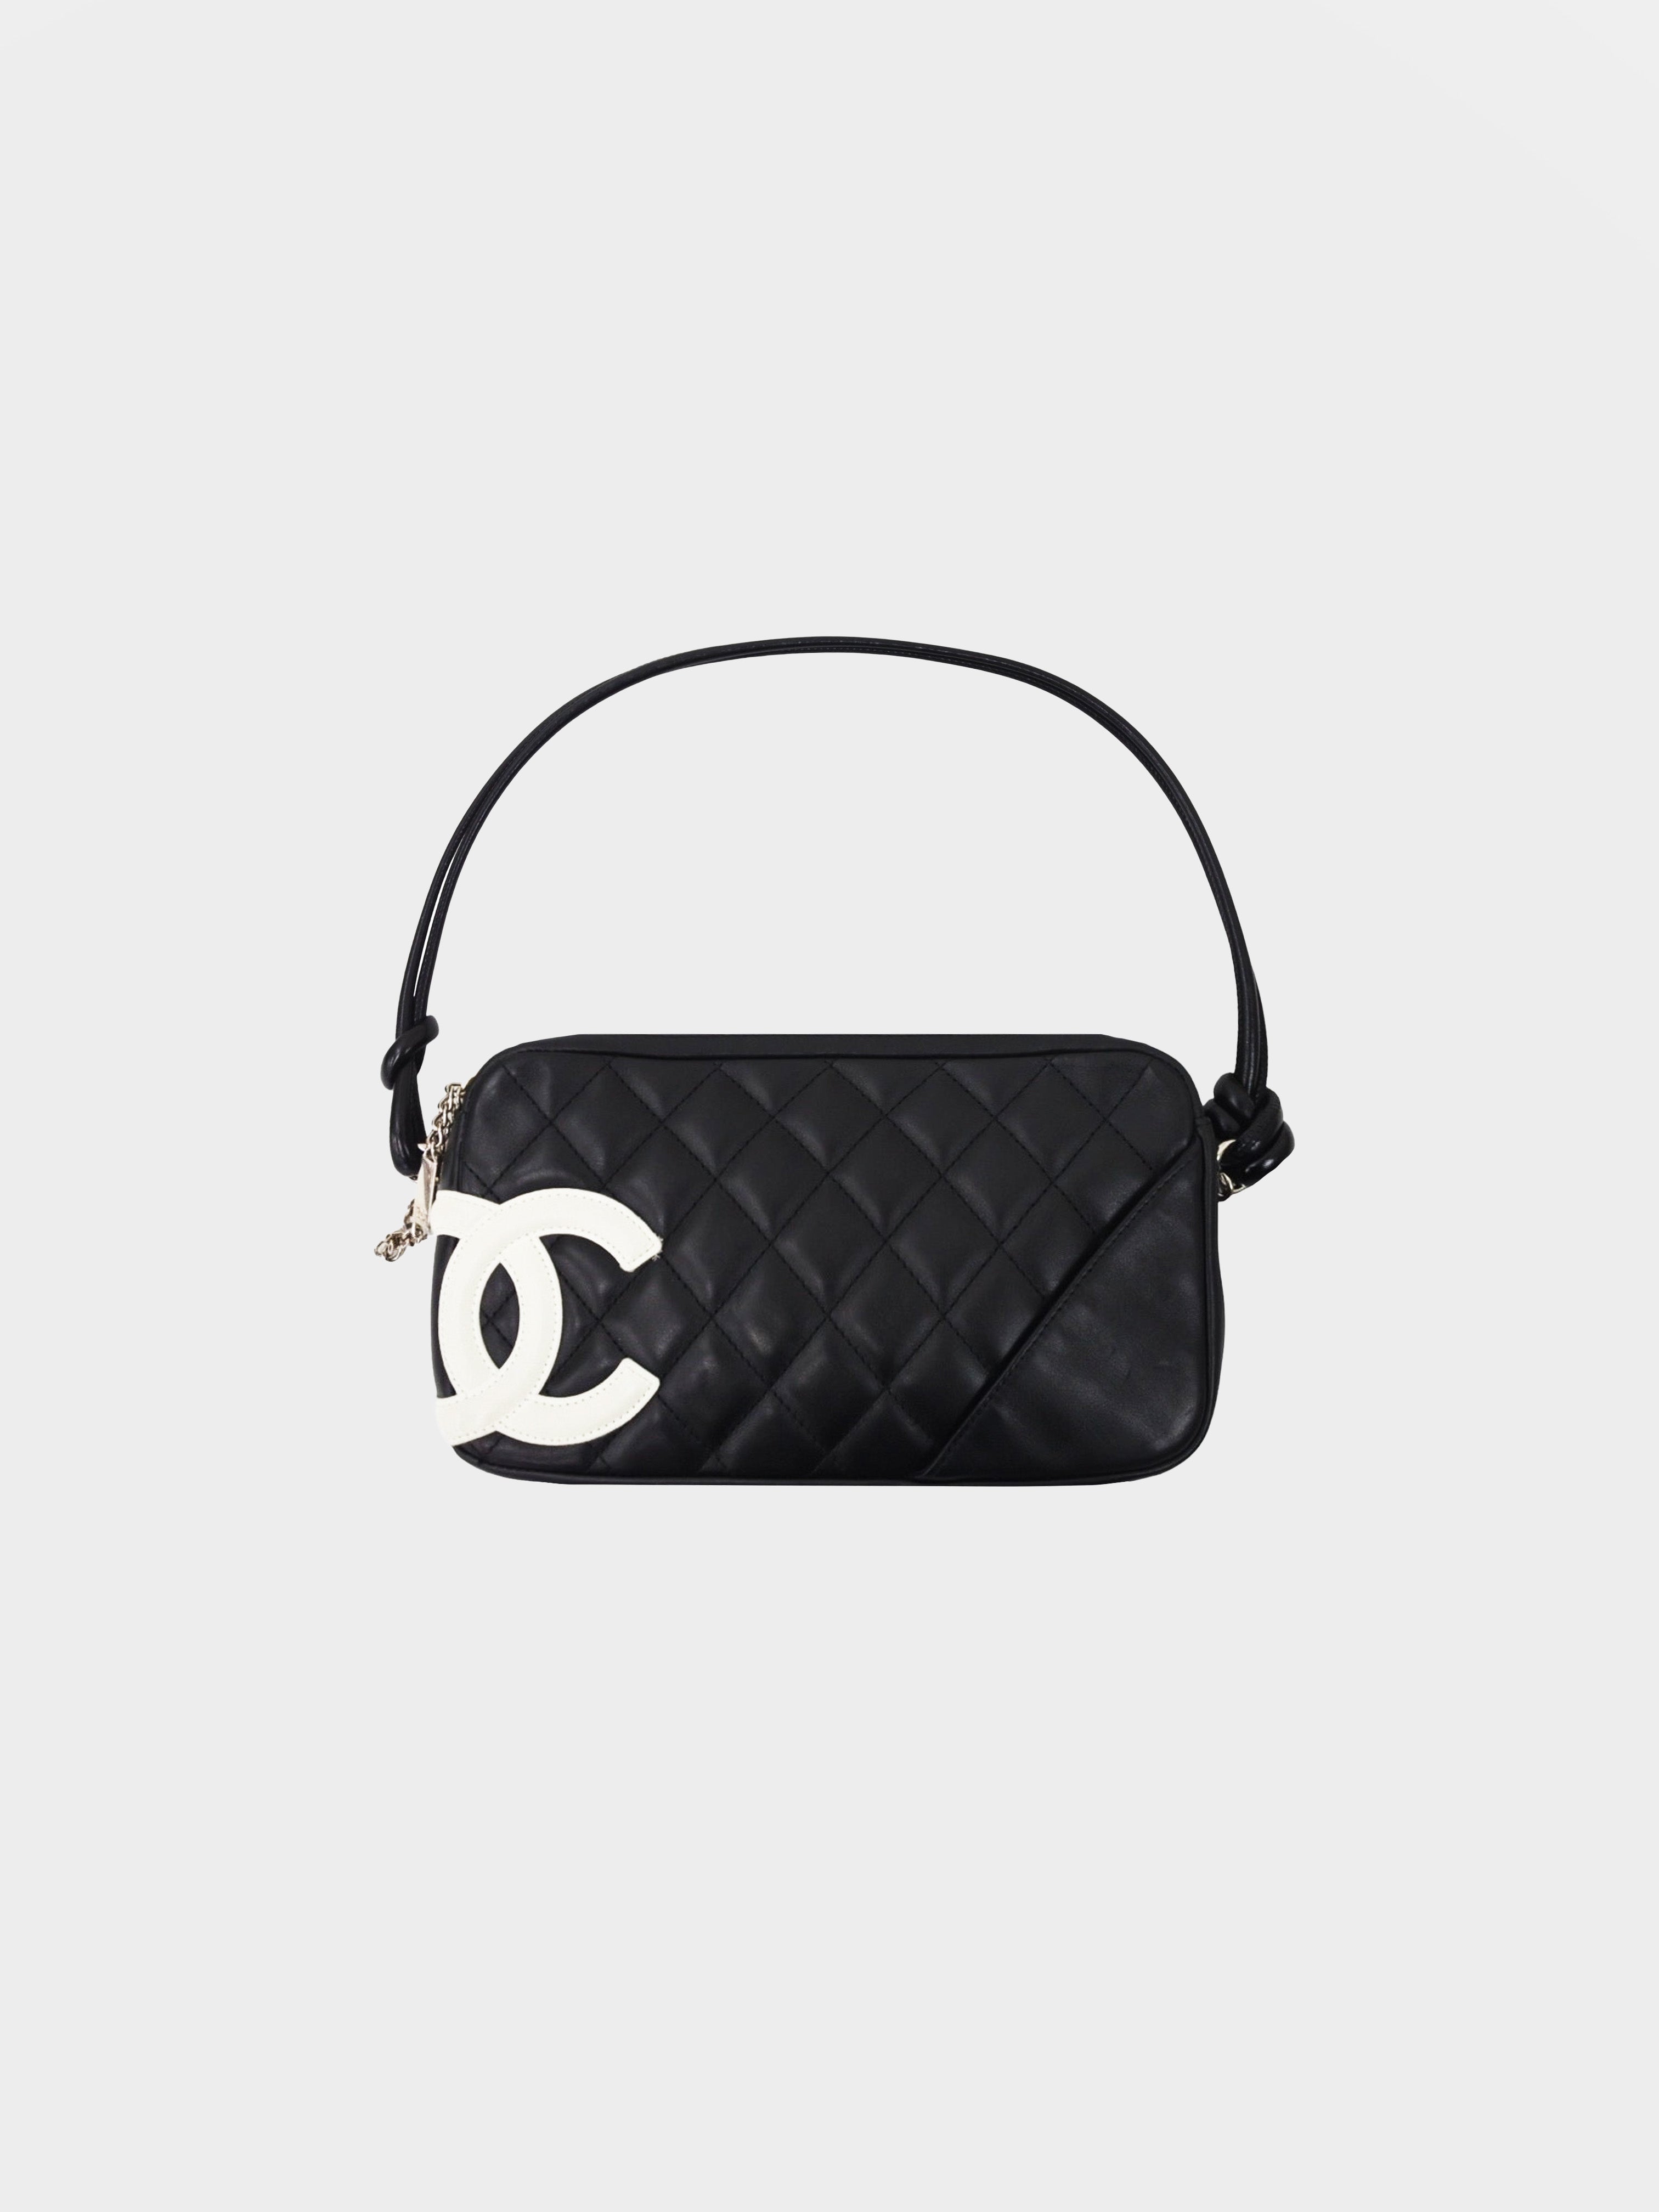 Chanel Black & White Cambon Crossbody Messenger